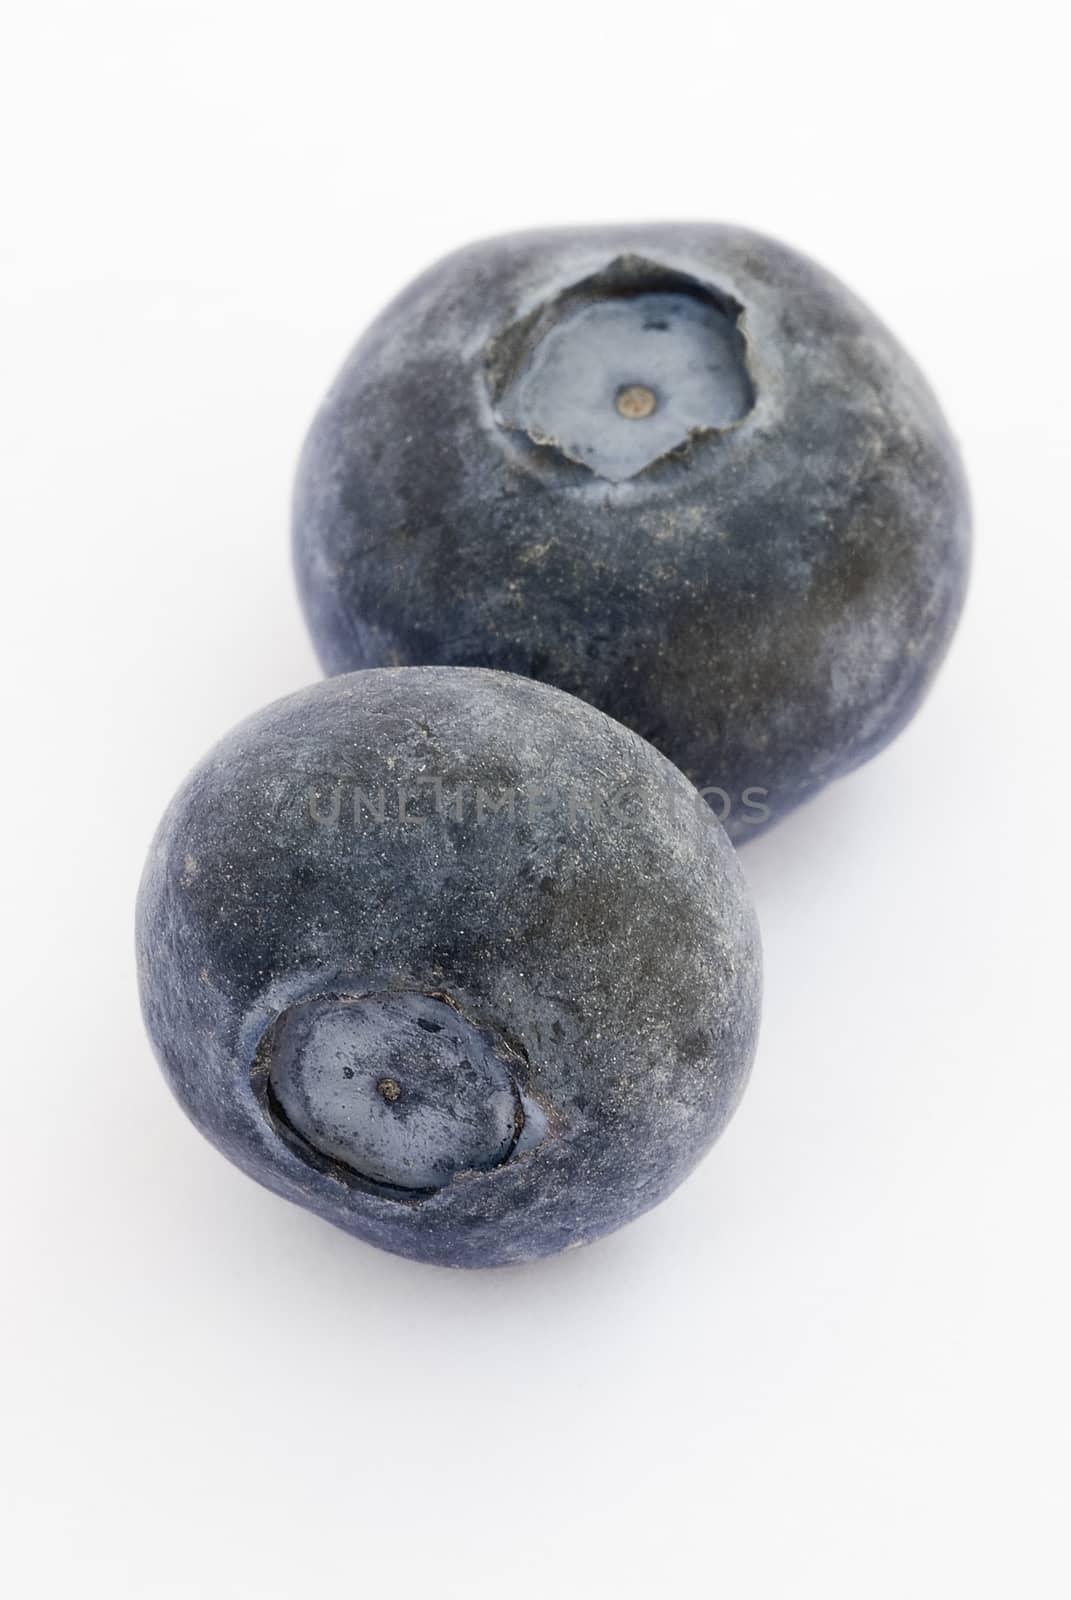 Blueberry fruit on a white background by vainillaychile